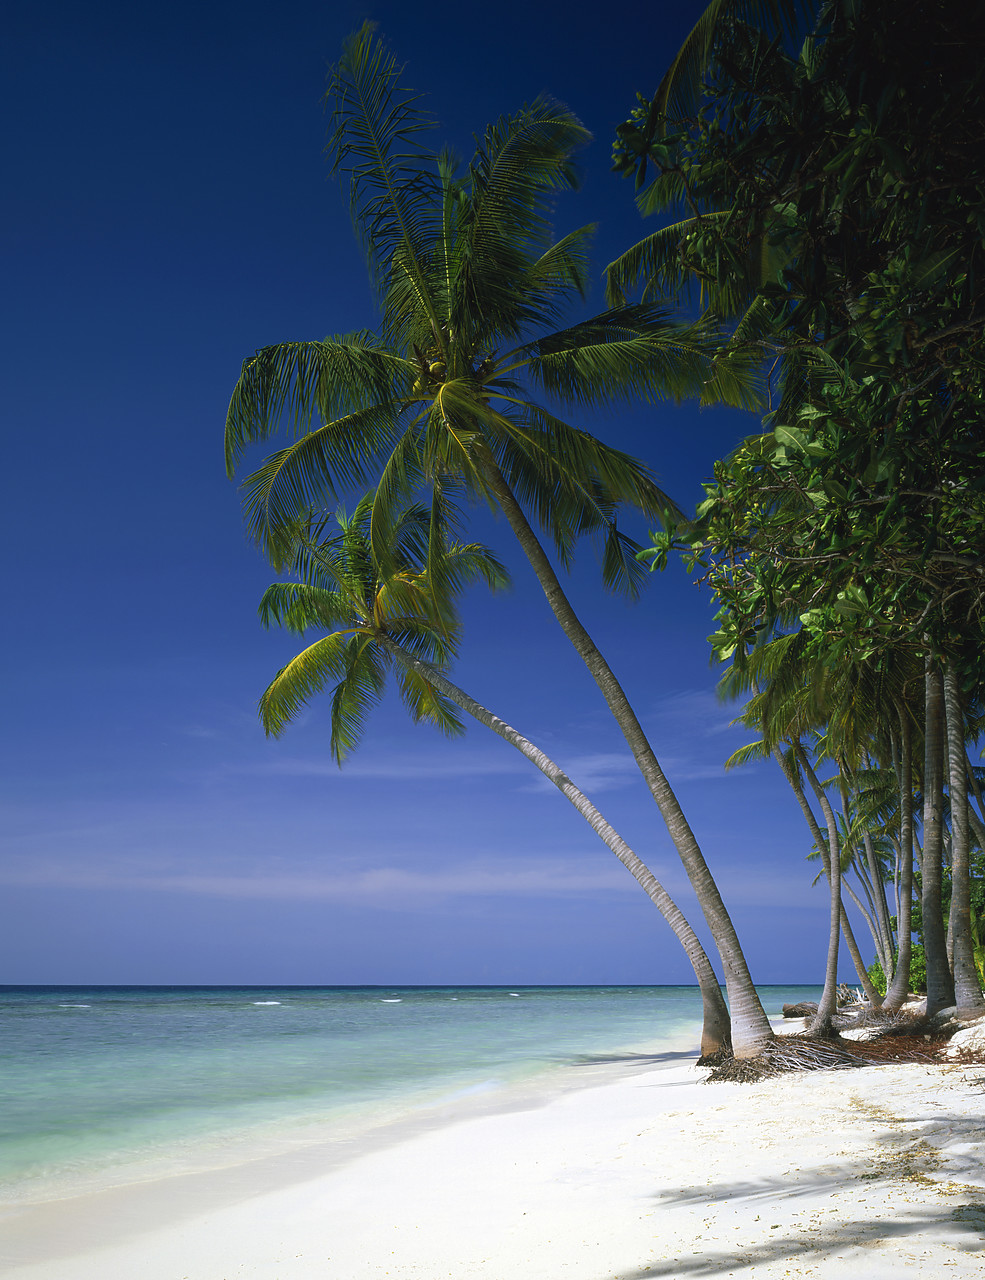 #080042-2 - Deserted Palm Fringed Beach, Kuredu, Maldives